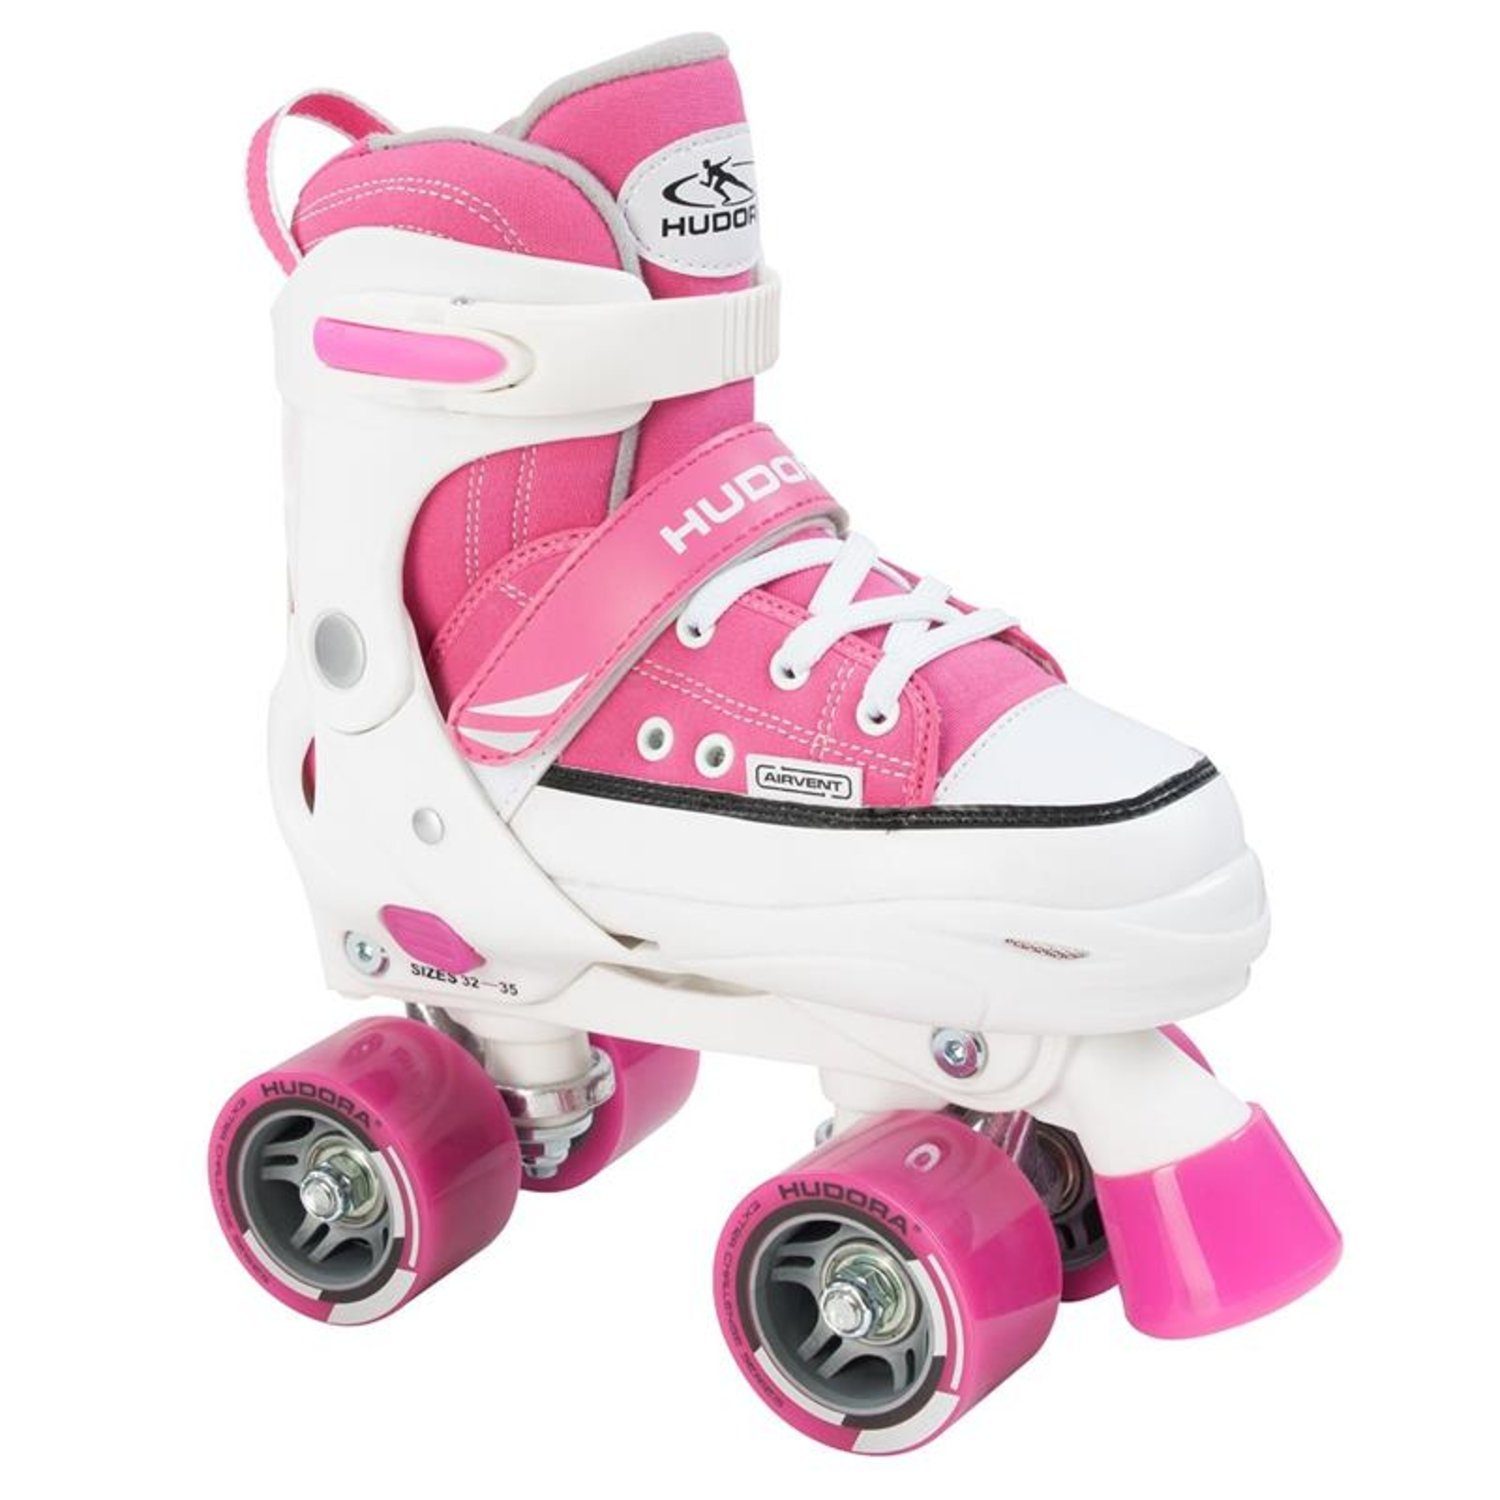 Hudora Gr. 32-35 Inlineskates pink, verstellbar Skate, 22034 Roller